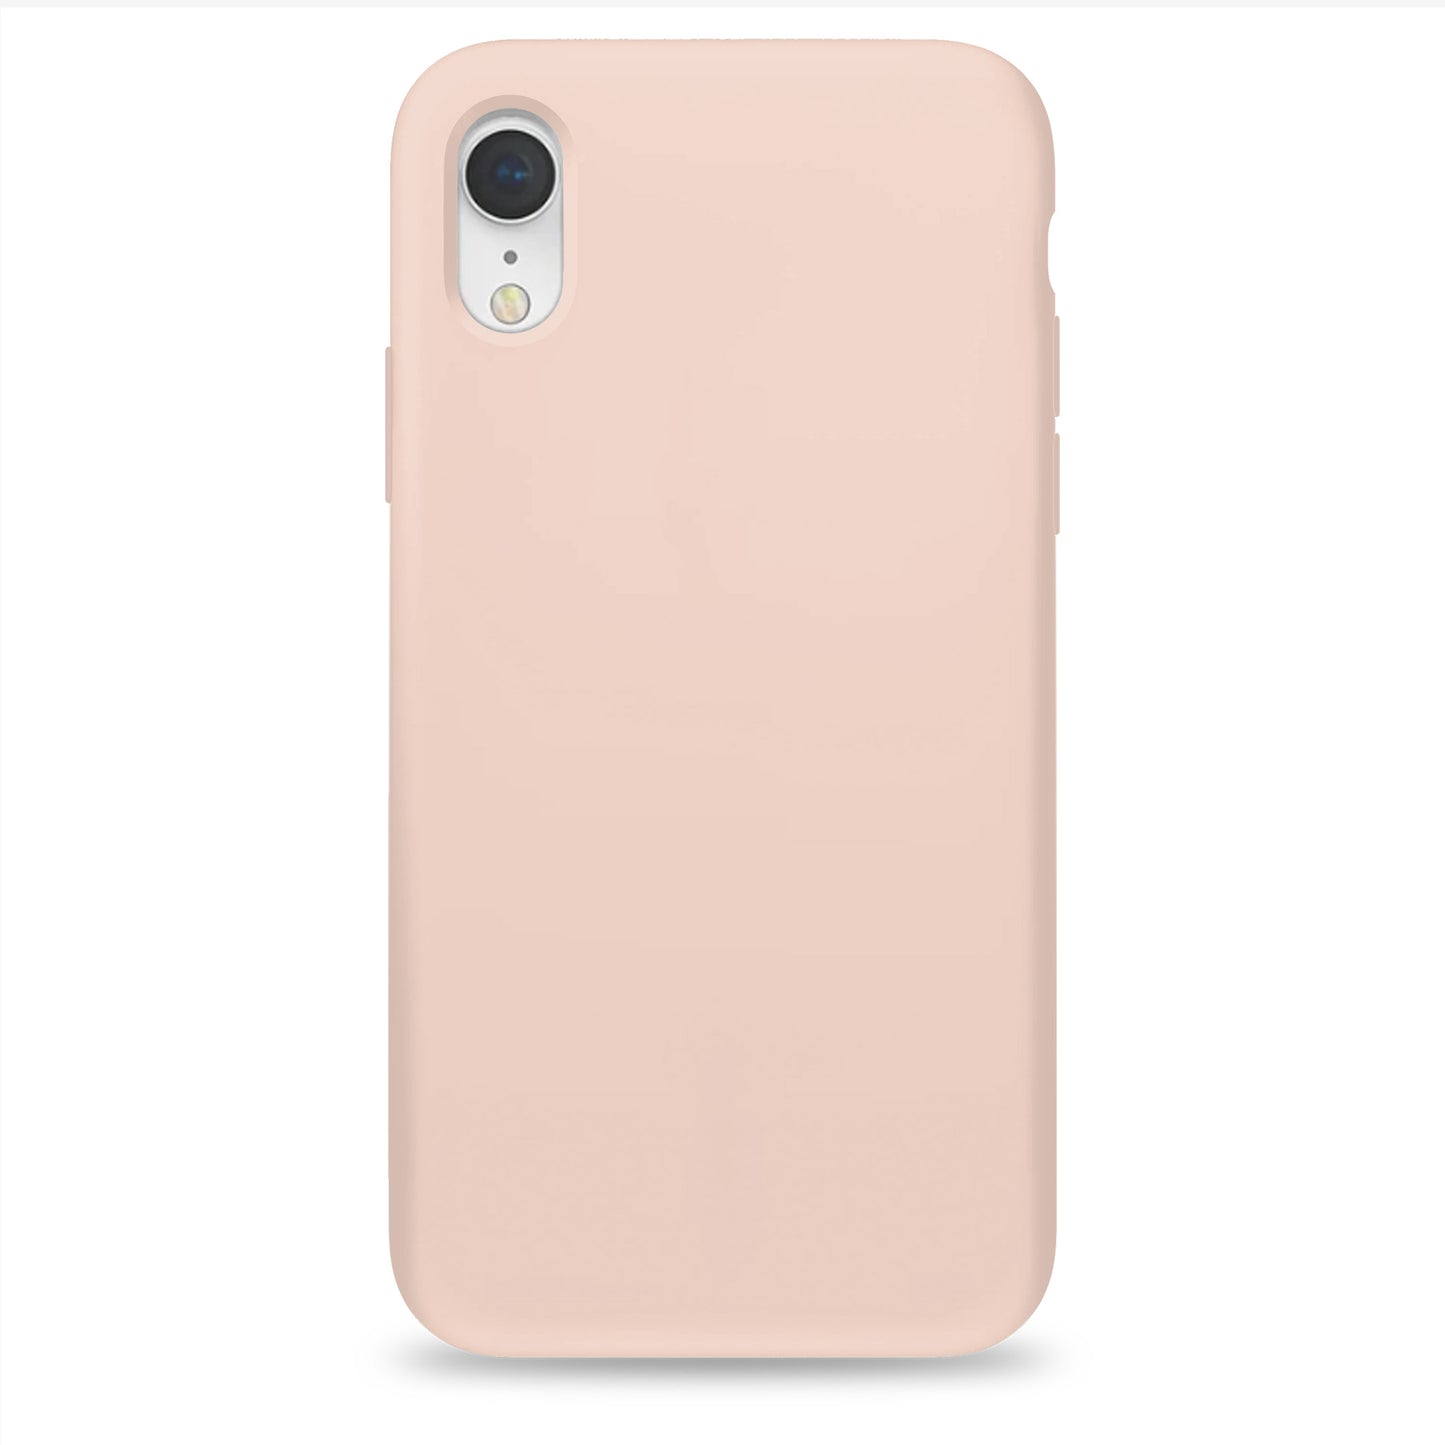 Coque en silicone rose sable pour iPhone et Samsung